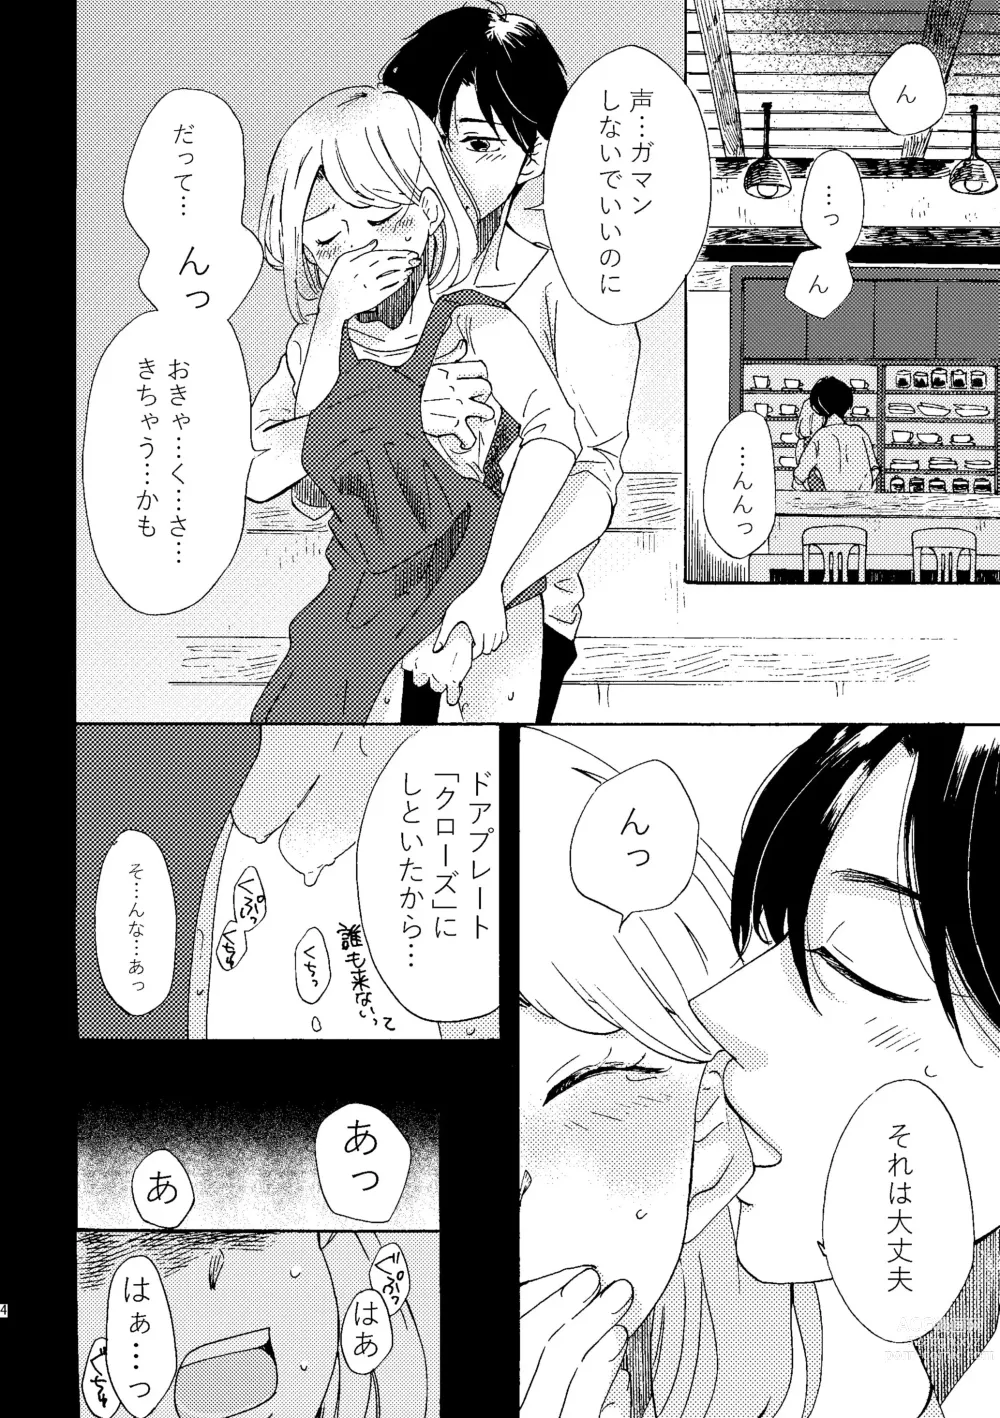 Page 4 of doujinshi Aoi-kun no Koi